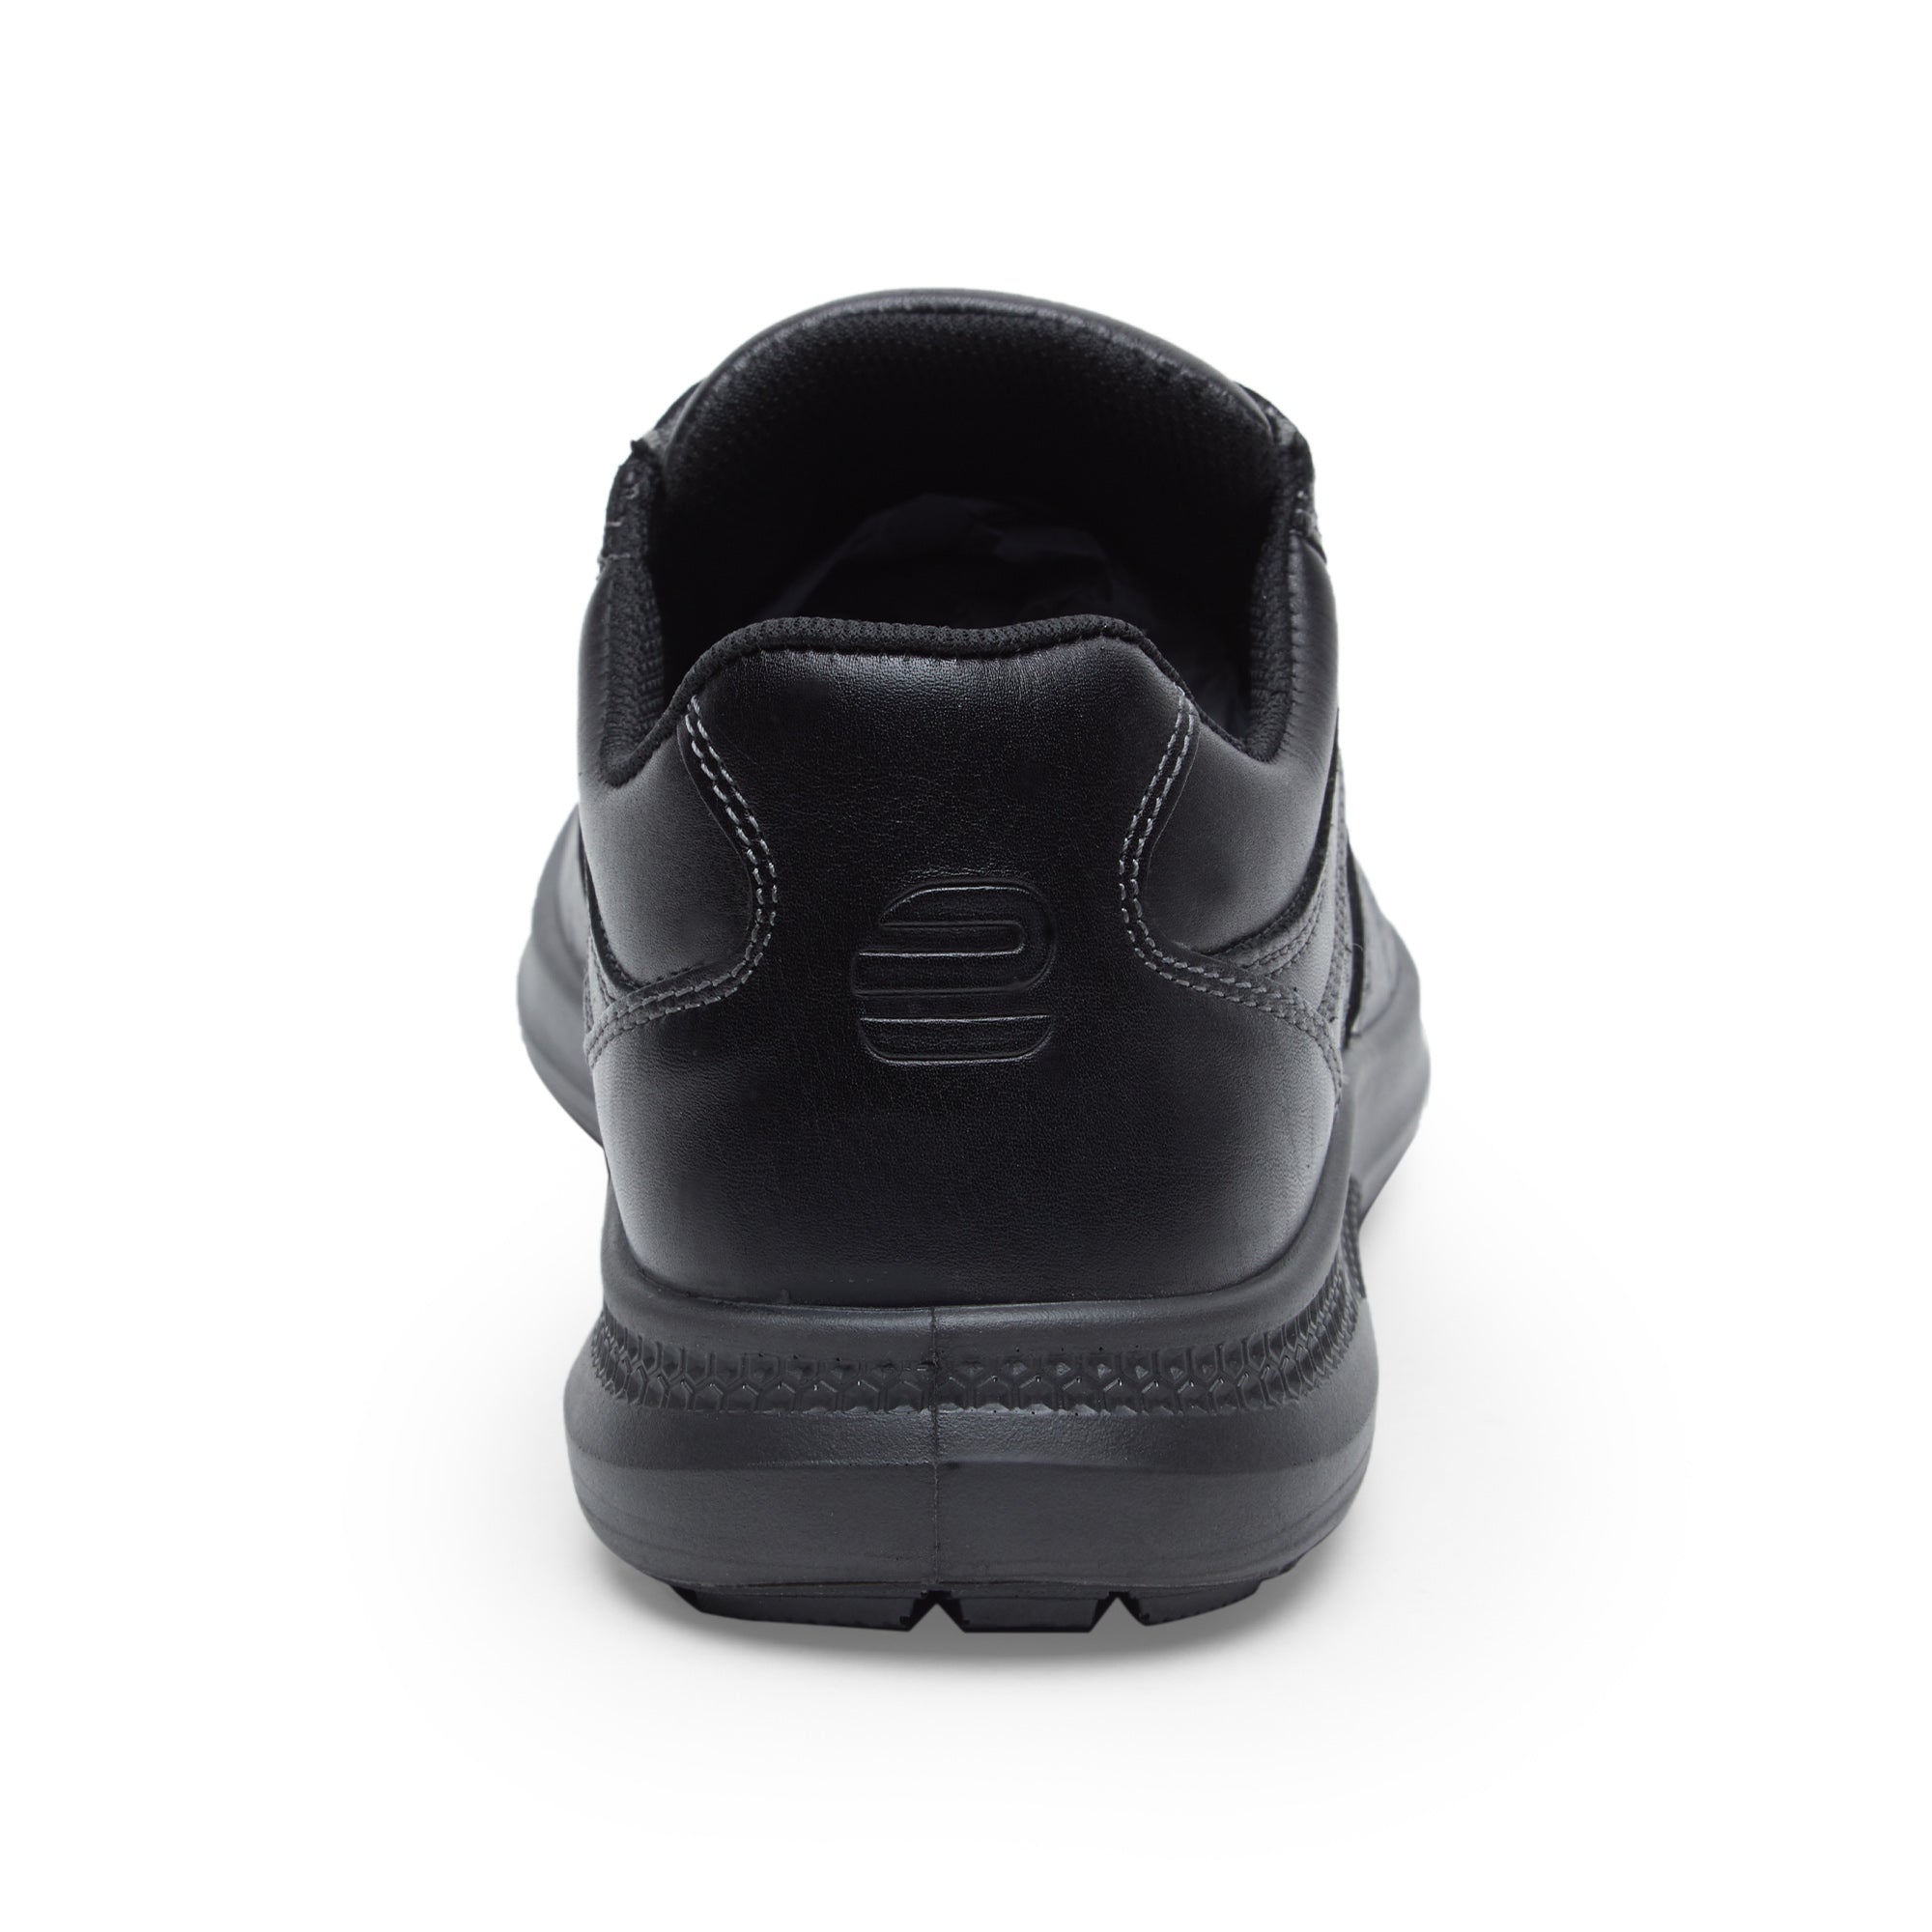 Buy Kansas EK-07 Men Black Dress Casual Shoes | Ergon Style